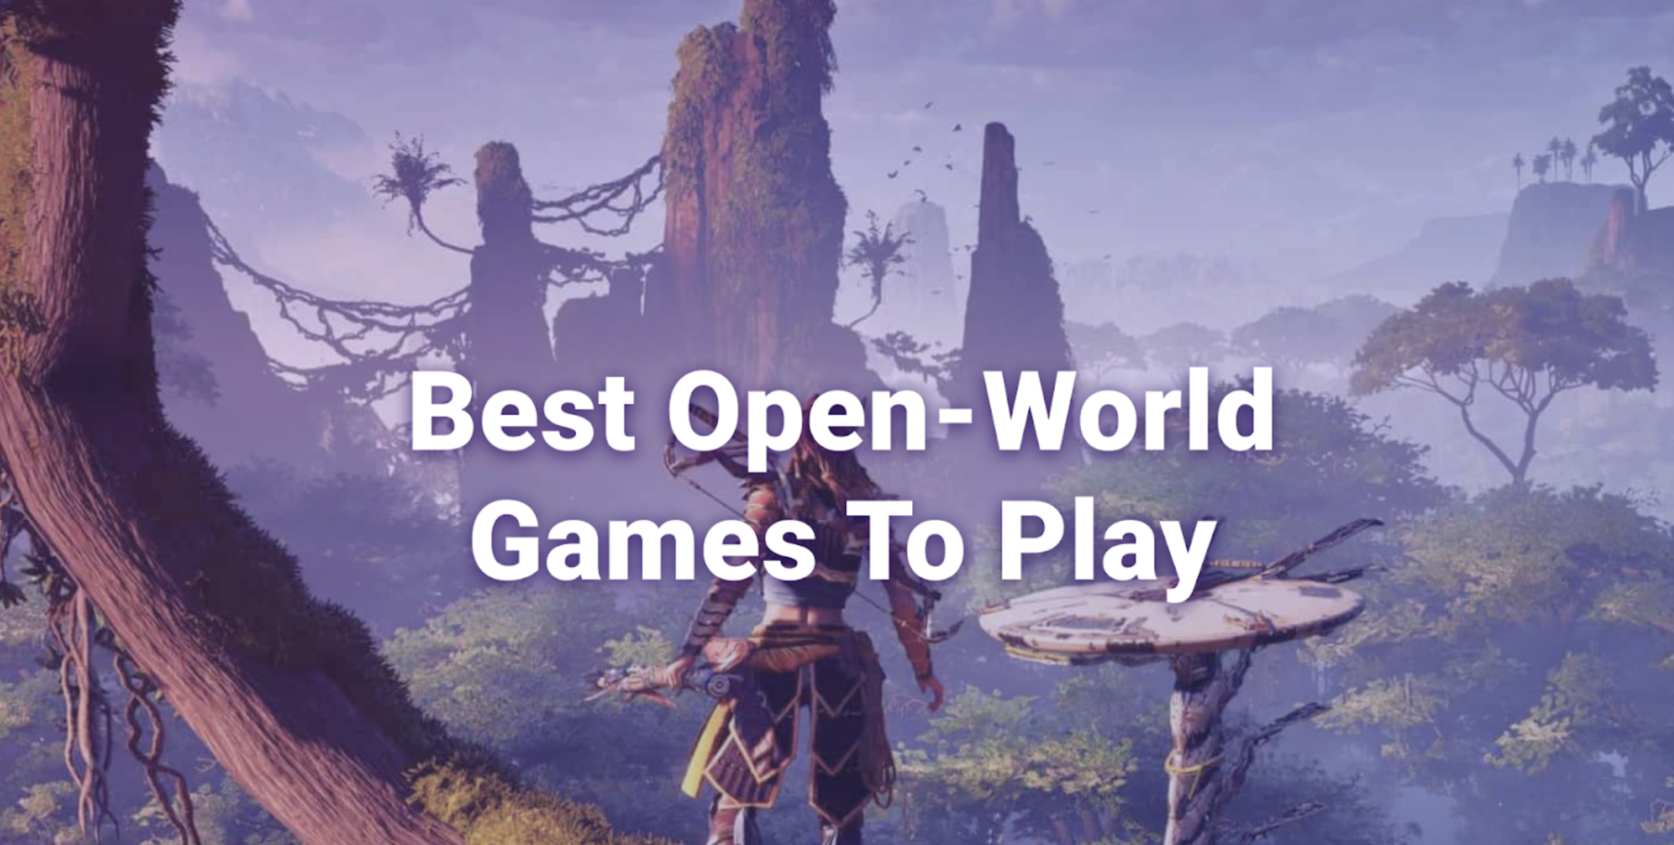 List of Top 10 Open World Games